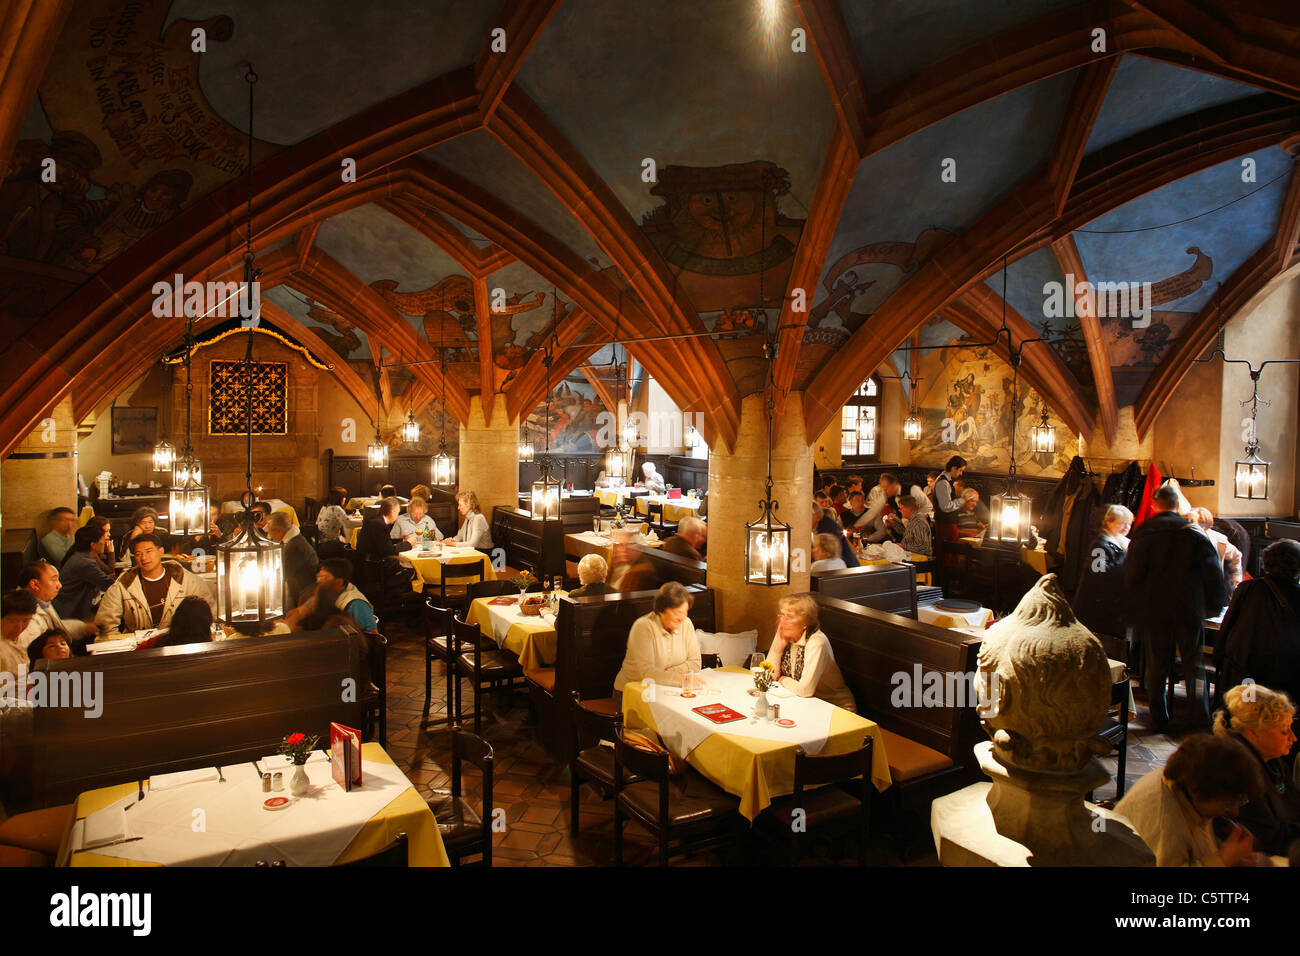 Germany, Bavaria, Munich, People in ratskeller restaurant Stock Photo -  Alamy